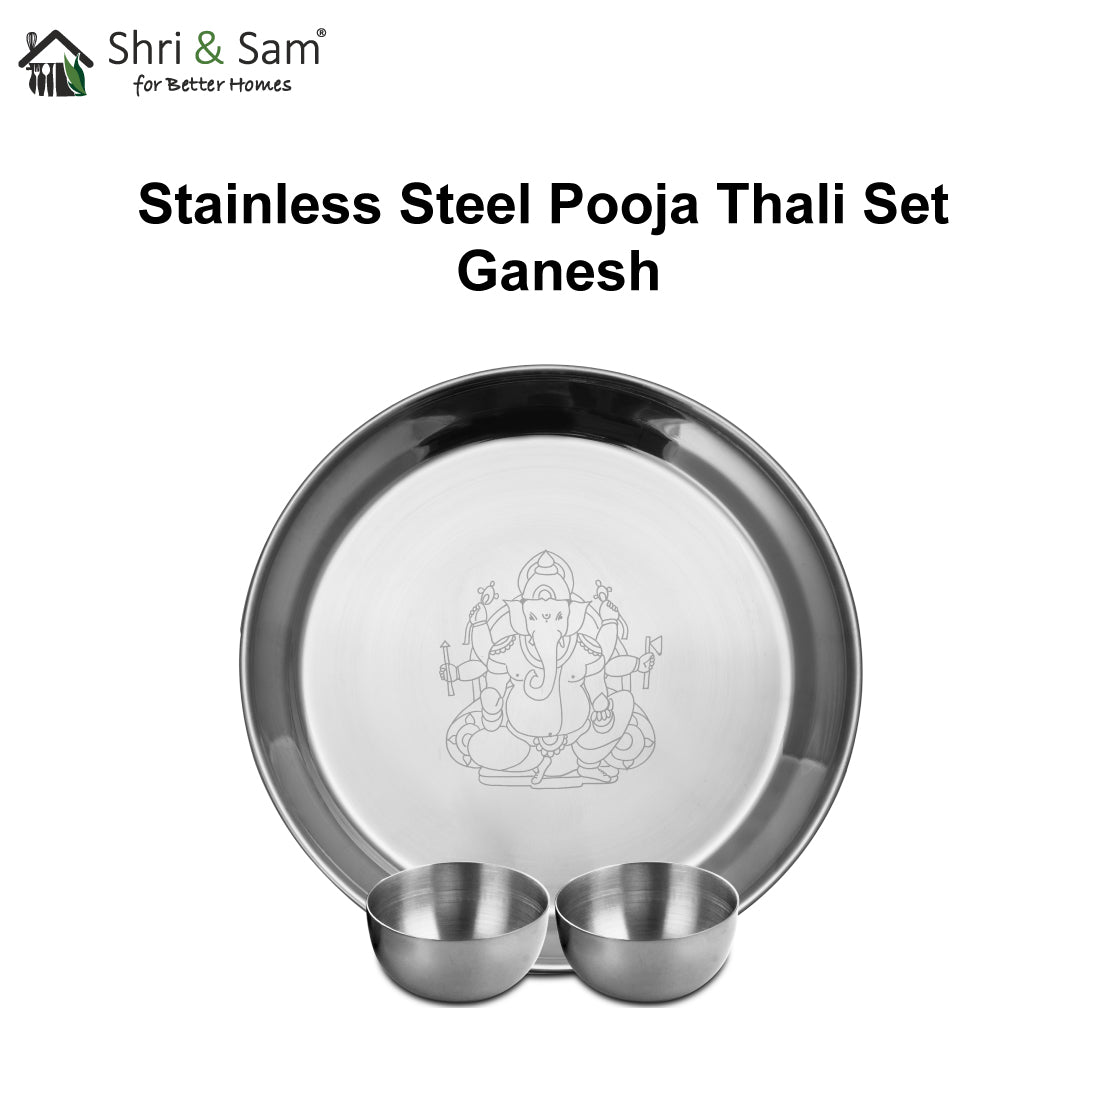 Stainless Steel Pooja Thali Set Ganesh